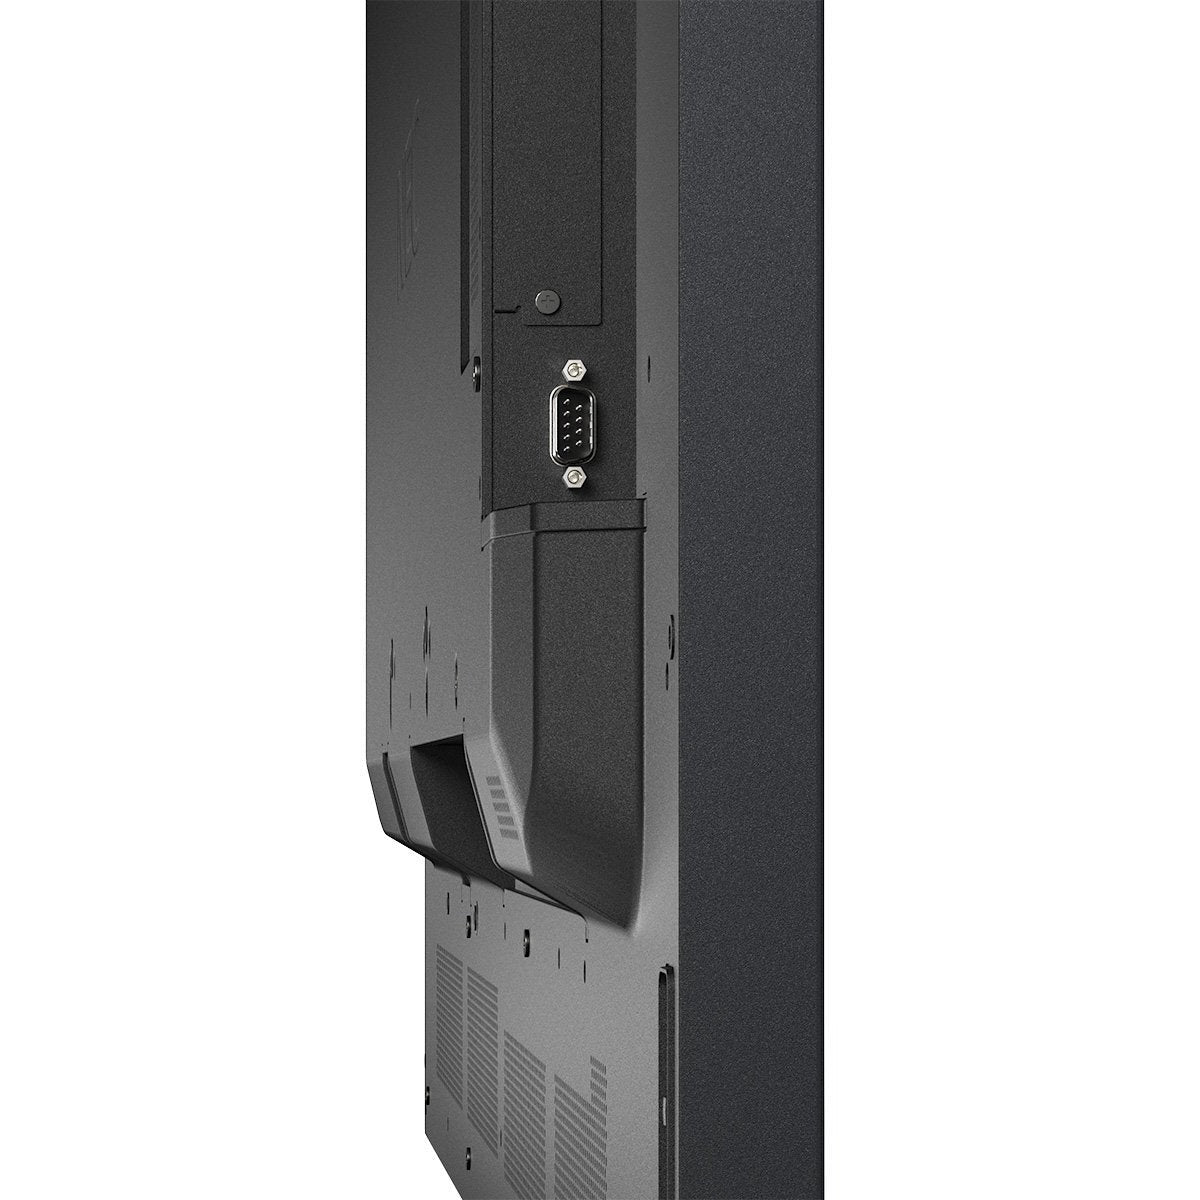 Dark Slate Gray NEC MultiSync® P555 LCD 55" Professional Large Format Display